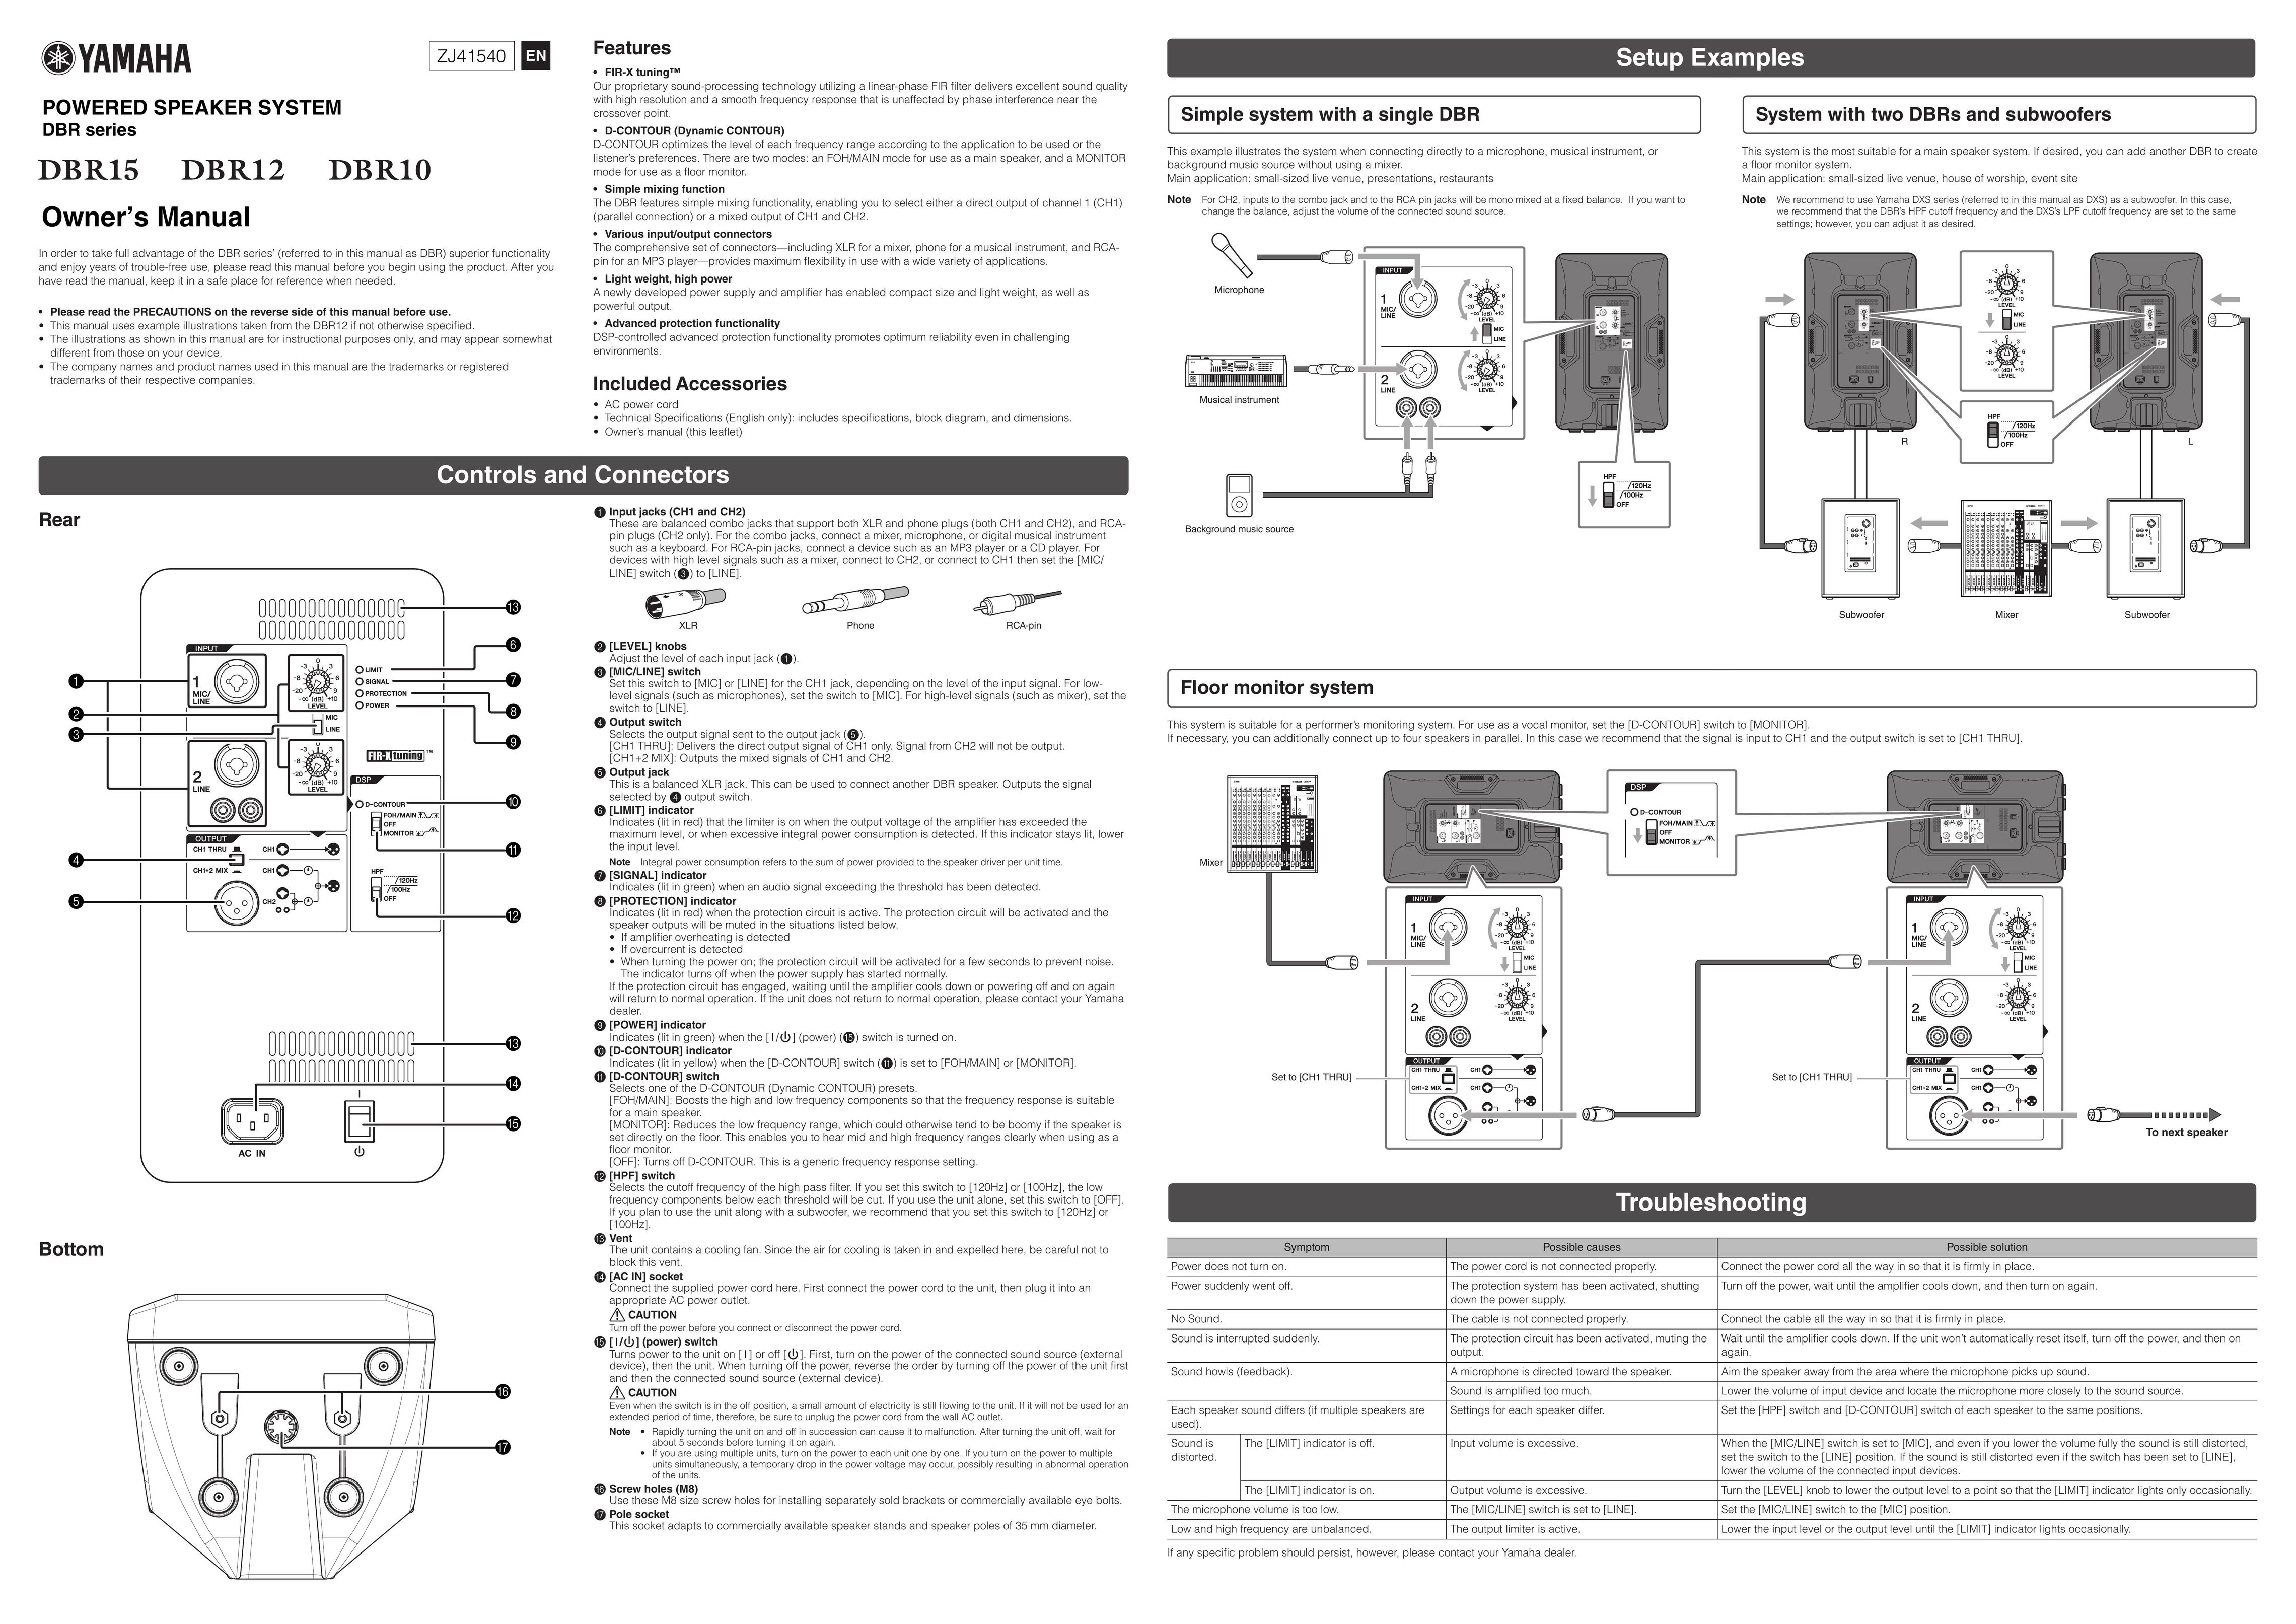 Yamaha DBR12 Speaker System User Manual